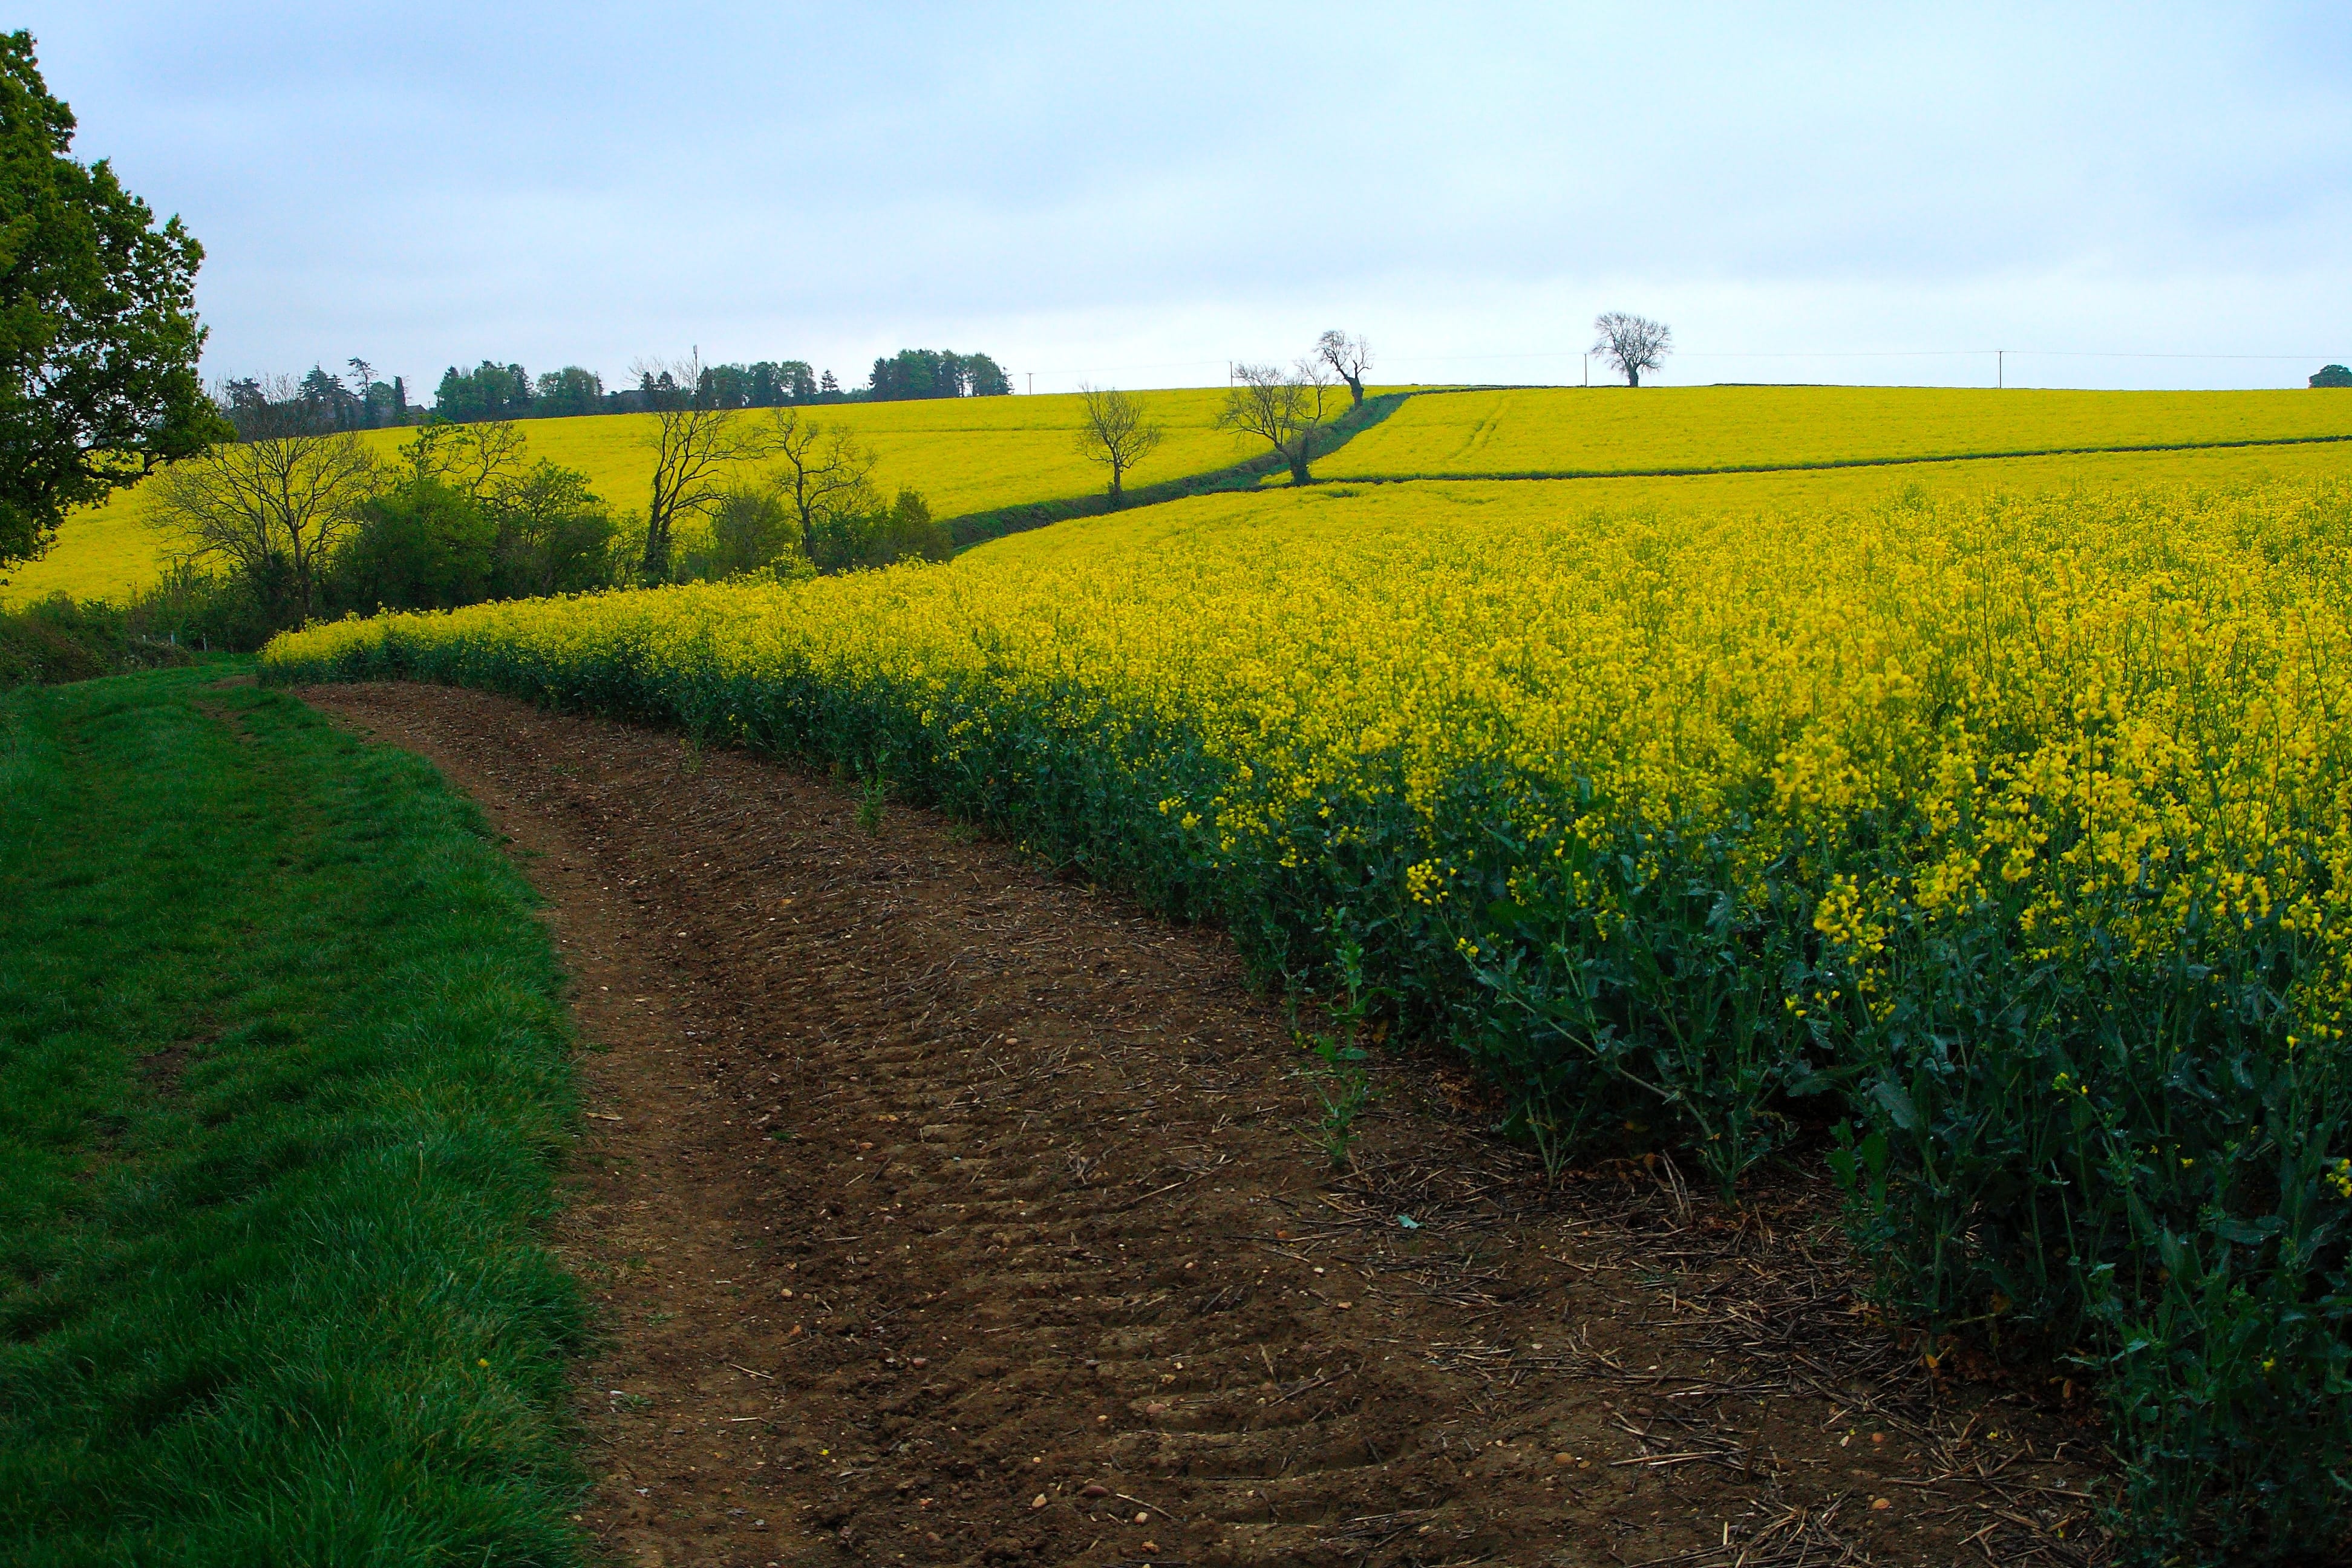 Dirt path running along field of yellow flowering plants; image by Benjamin Jameson, via Unsplash.com.